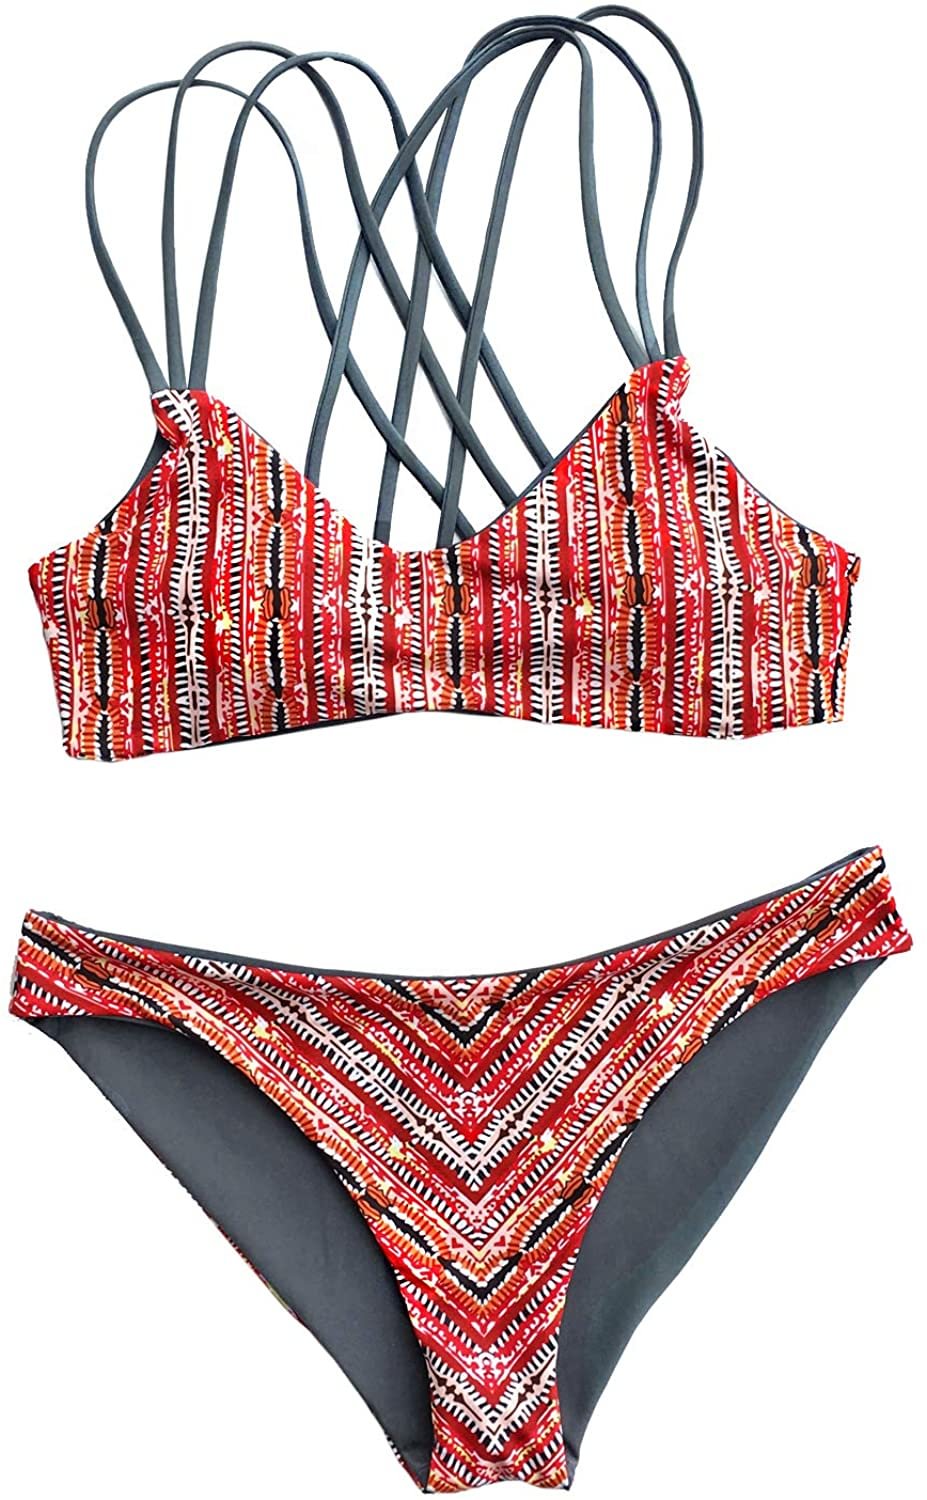 Women's Reversible Design Strappy Cross Back Padding Bikini